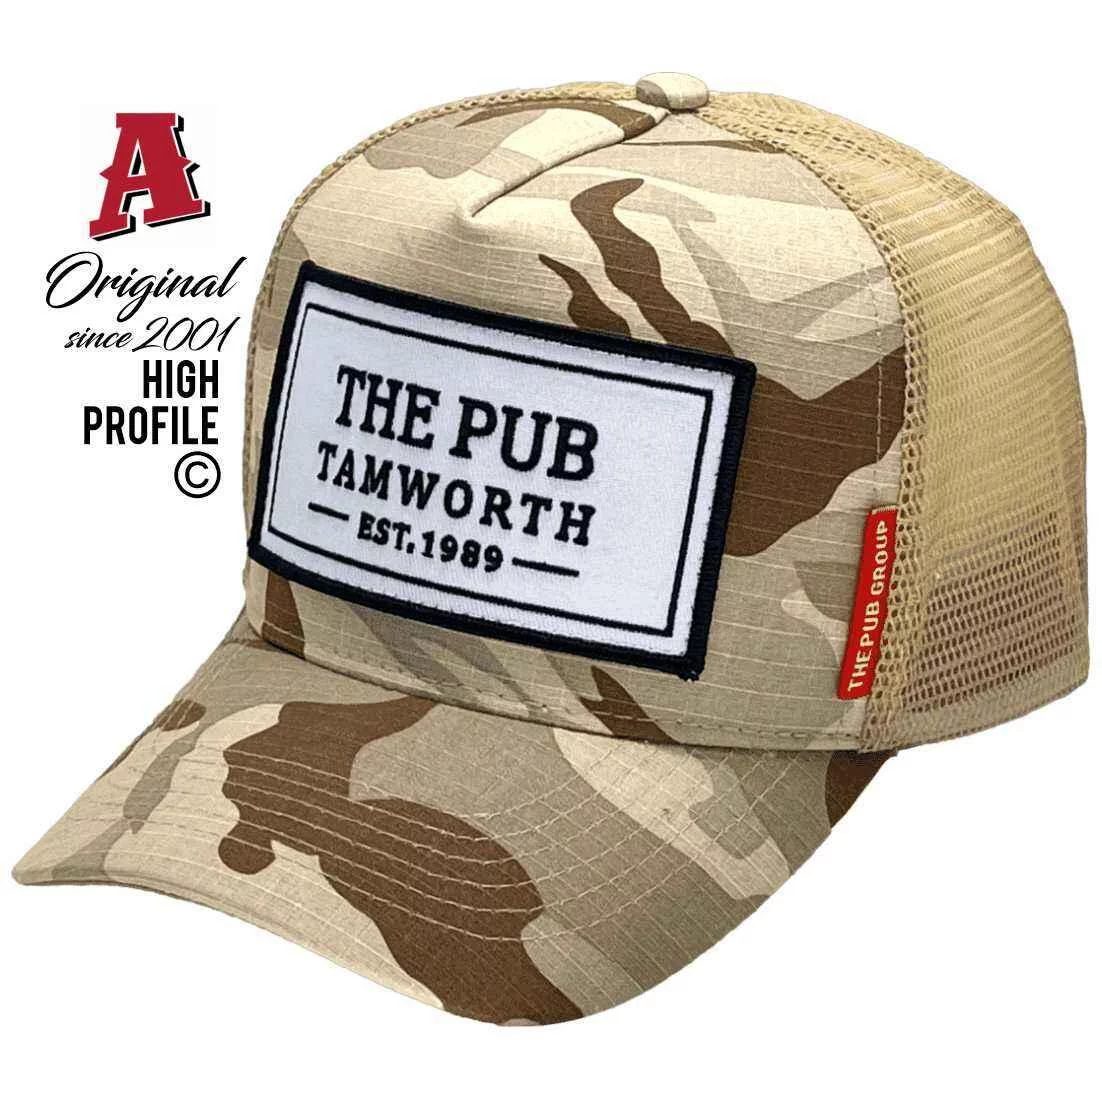 The Pub  Group Tamworth NSW Basic Aussie Trucker Hats with Australian HeadFit Crown Sew-on Badge with merrow edge Snapback